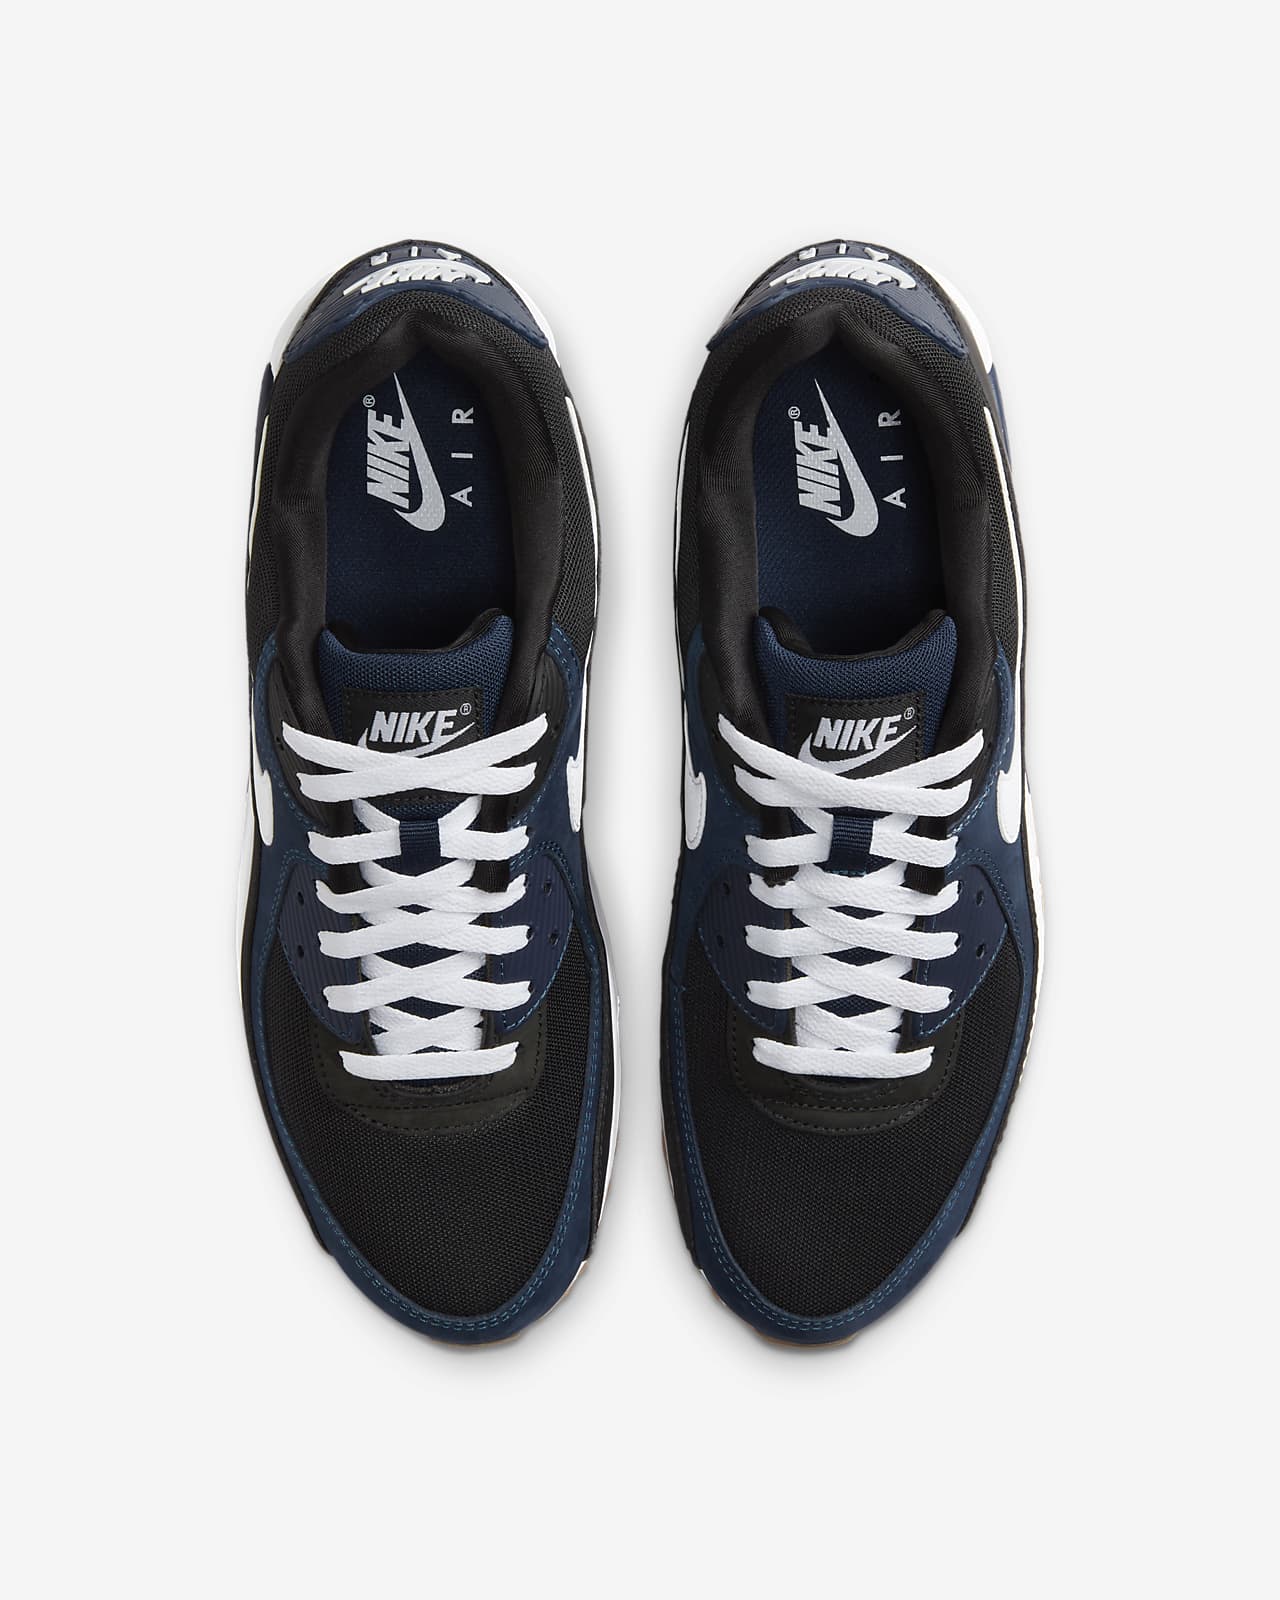 Chaussures Nike Air Max 90 Marron pour Homme